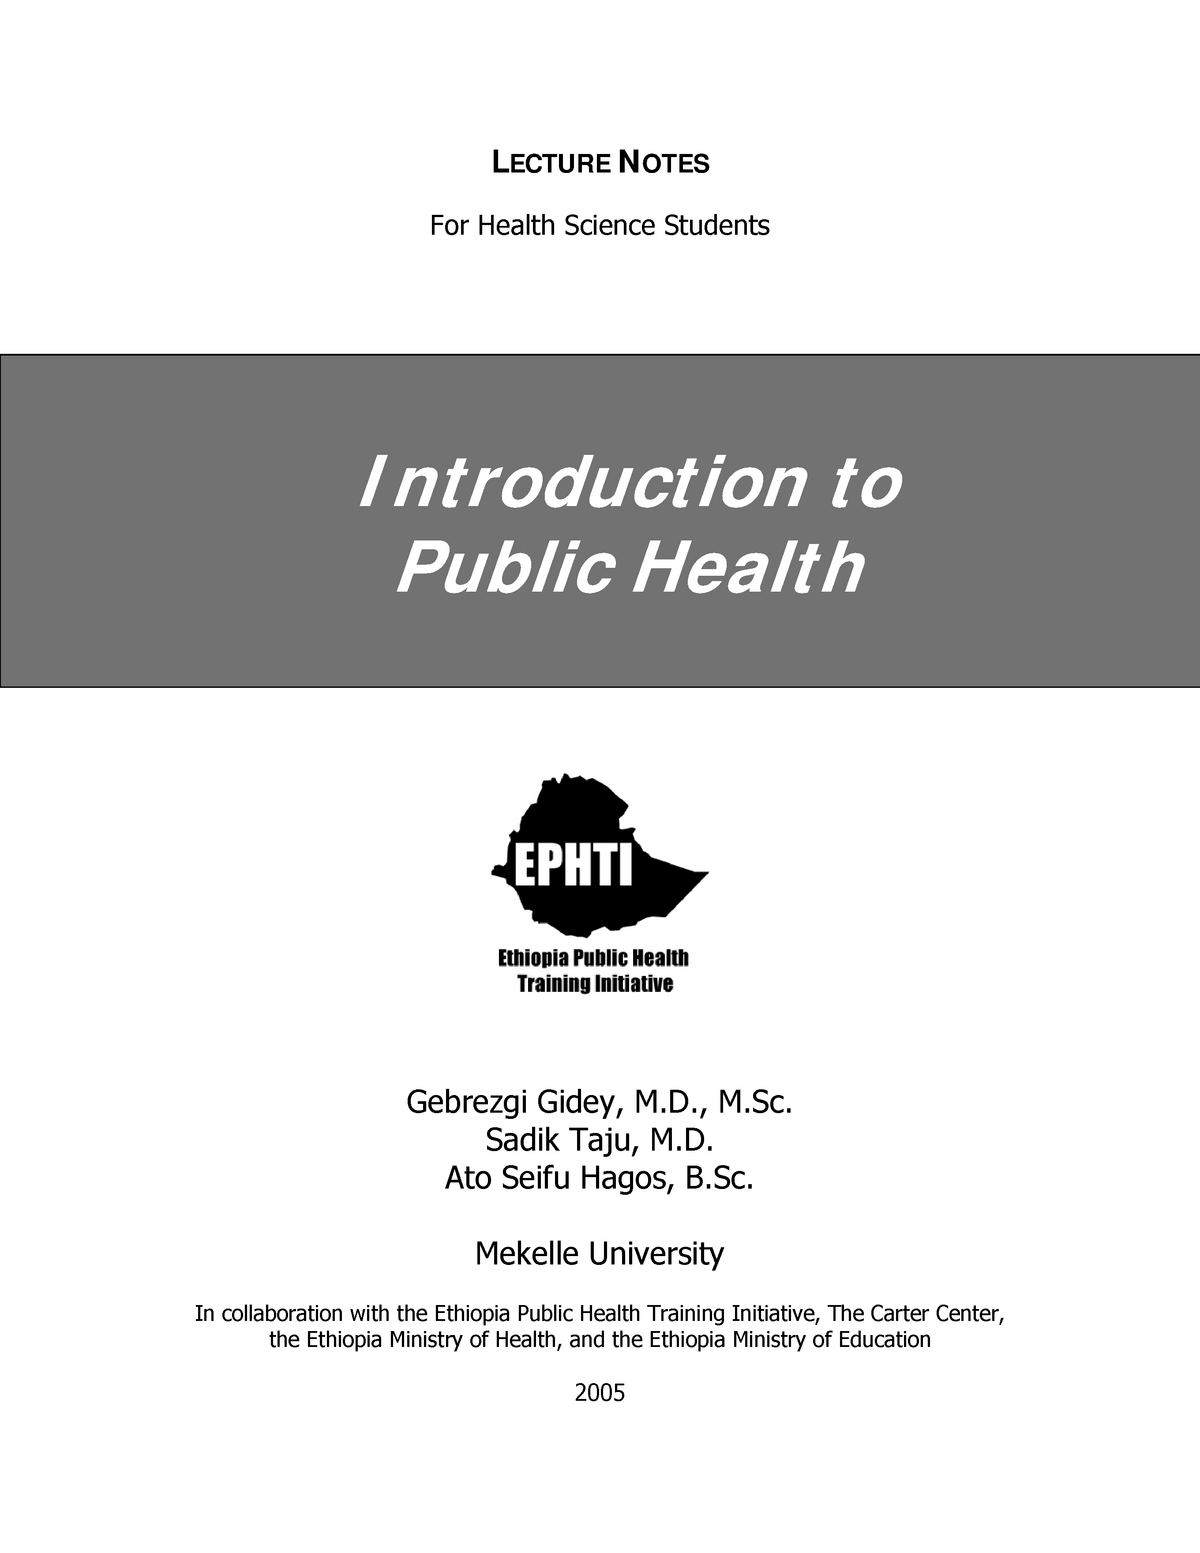 phd concept note public health